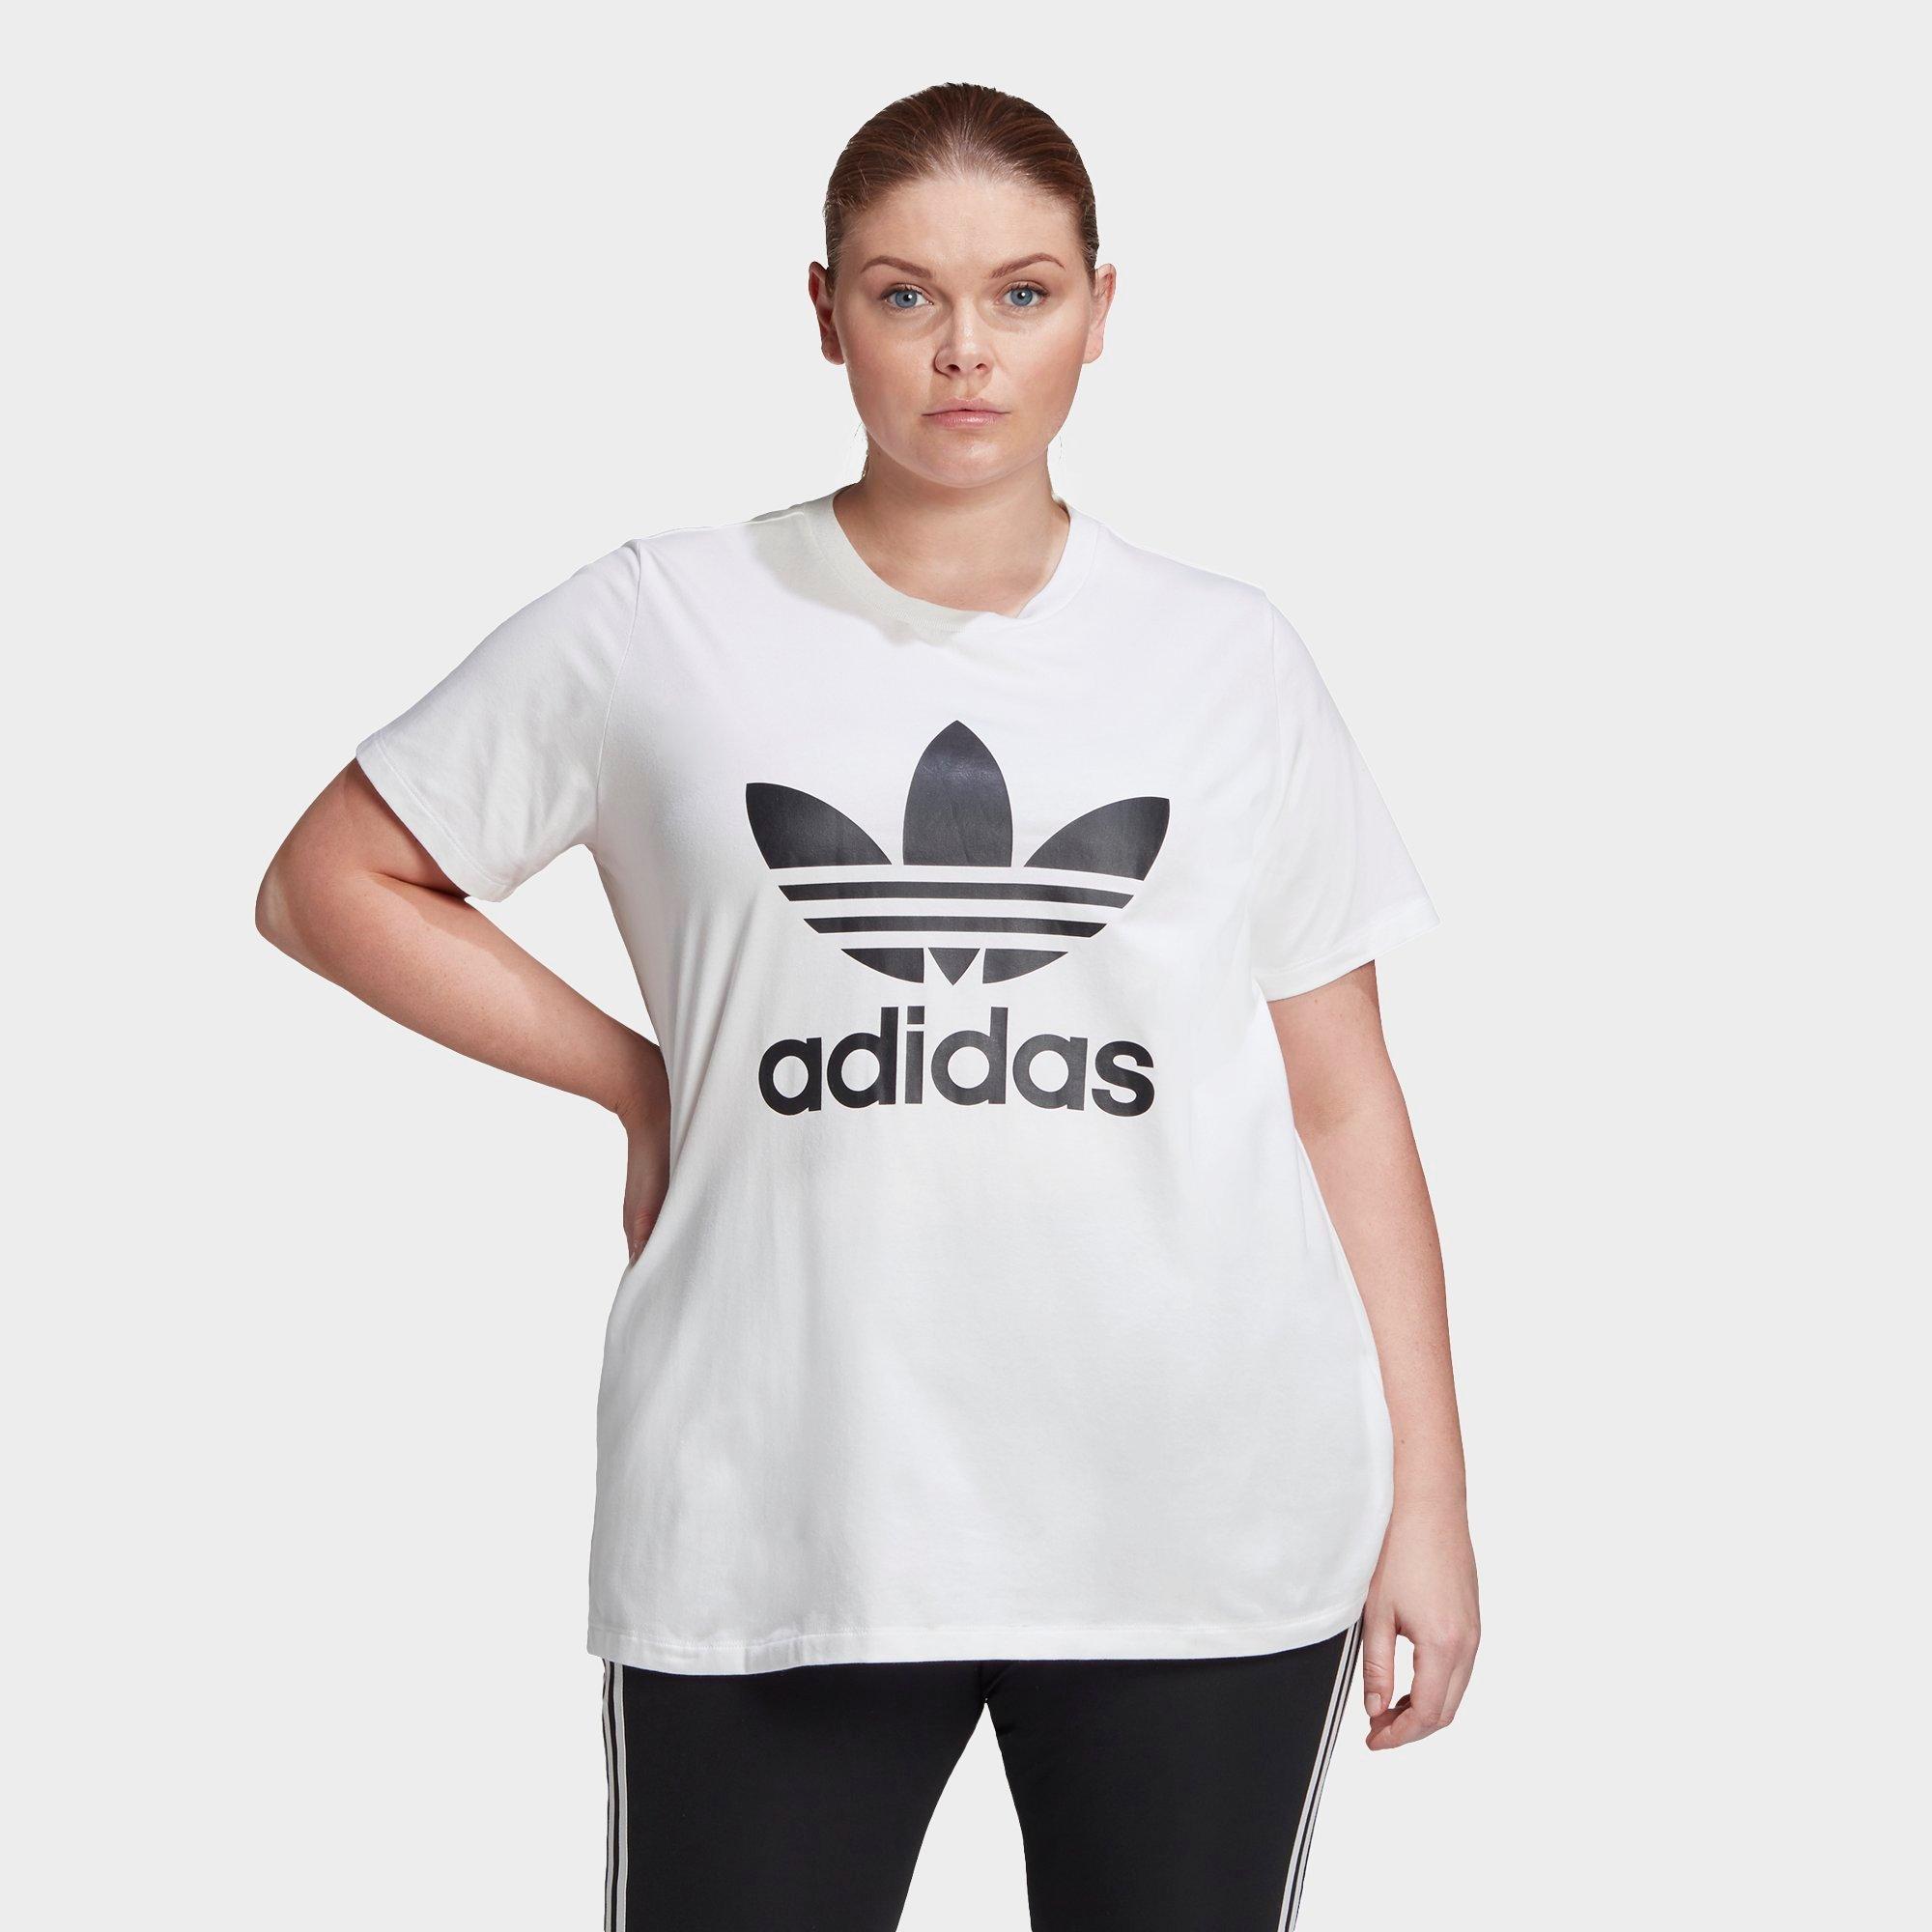 adidas t shirt dress plus size